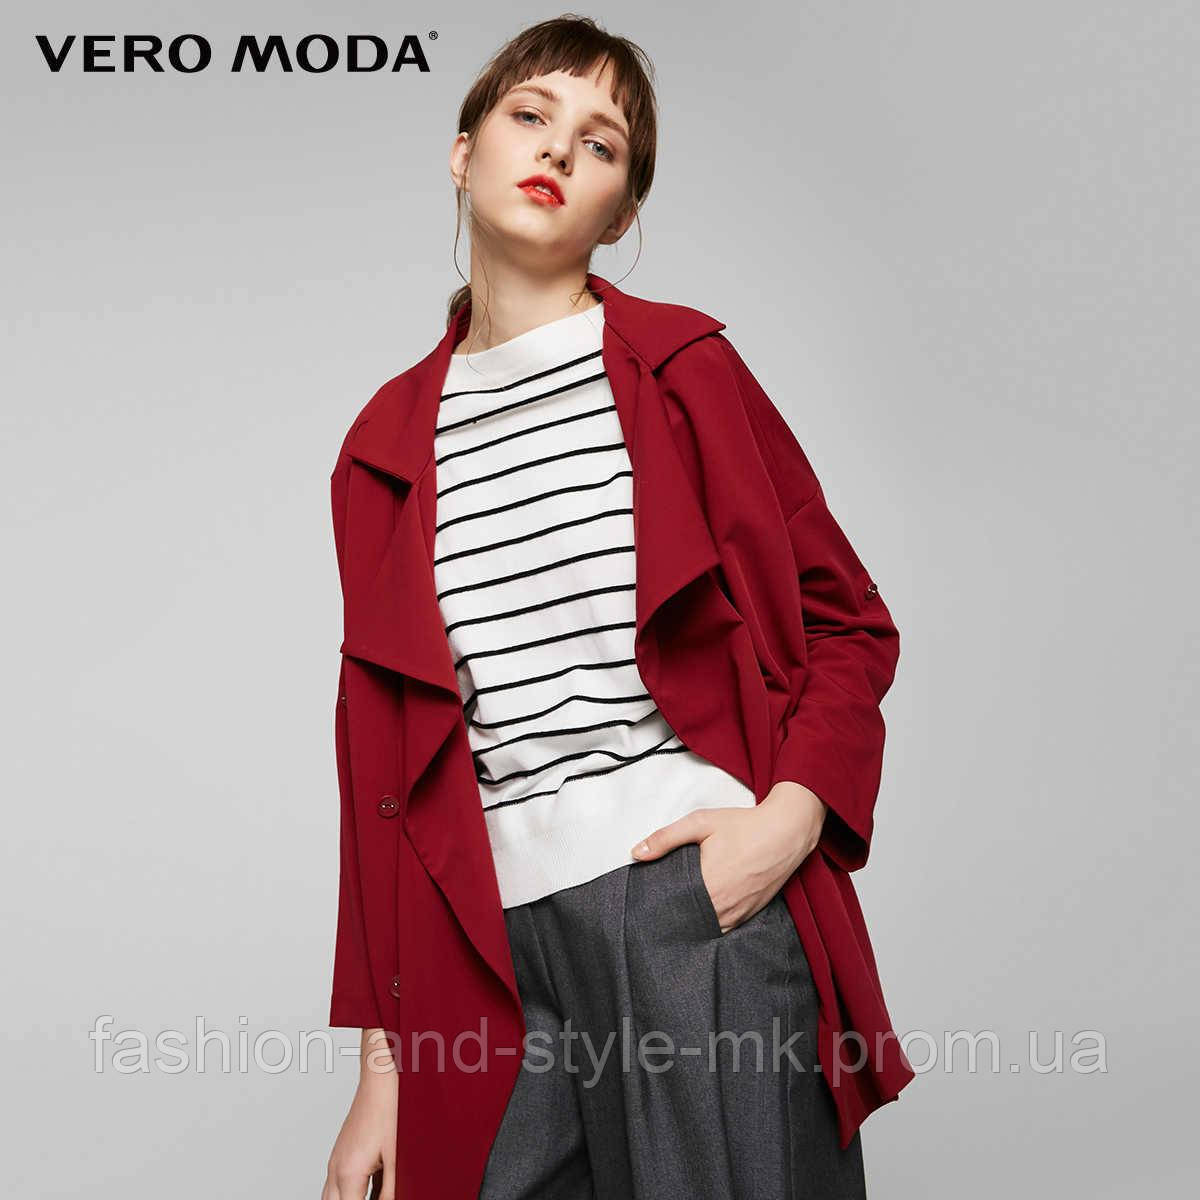 Vero moda плащ/ветровка Vero Moda, цена 500 грн., купить в Киеве — Prom.ua  (ID#1193838658)